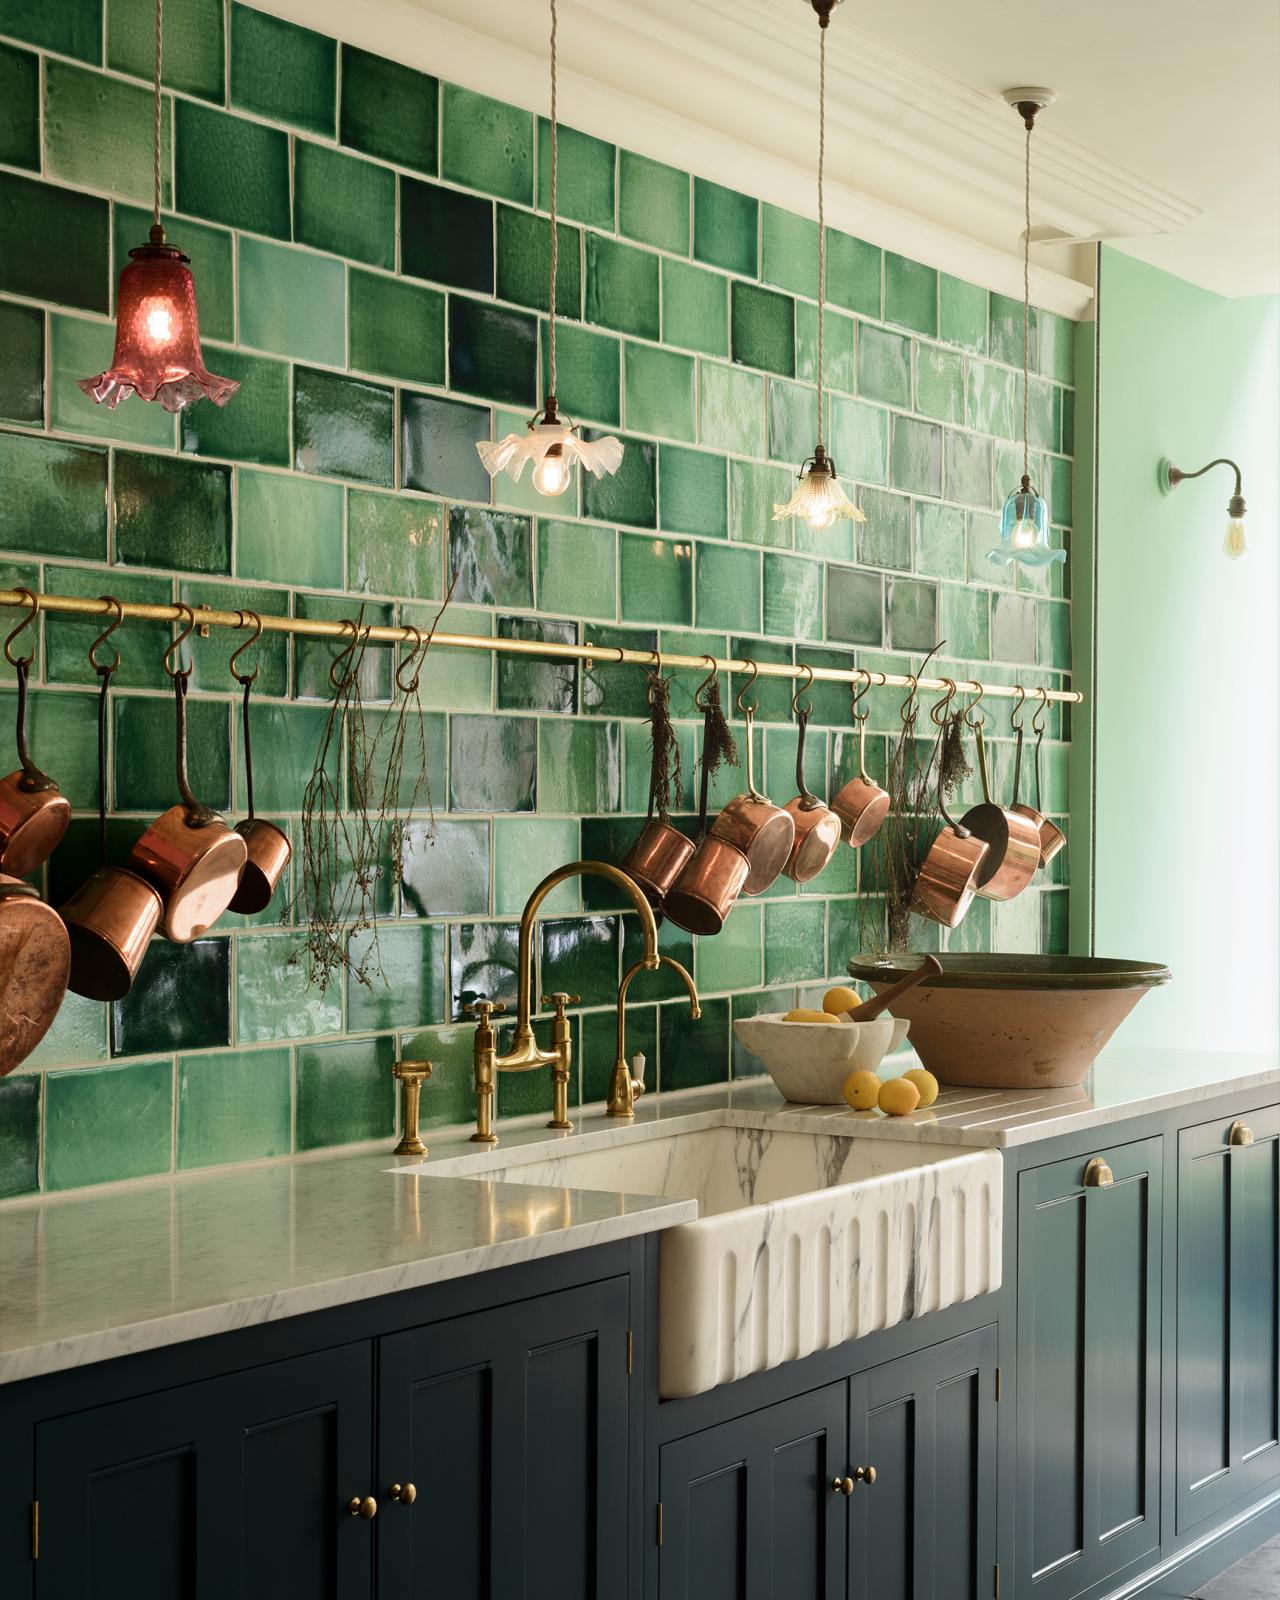 Emerald Green London Tiles   deVOL Kitchens